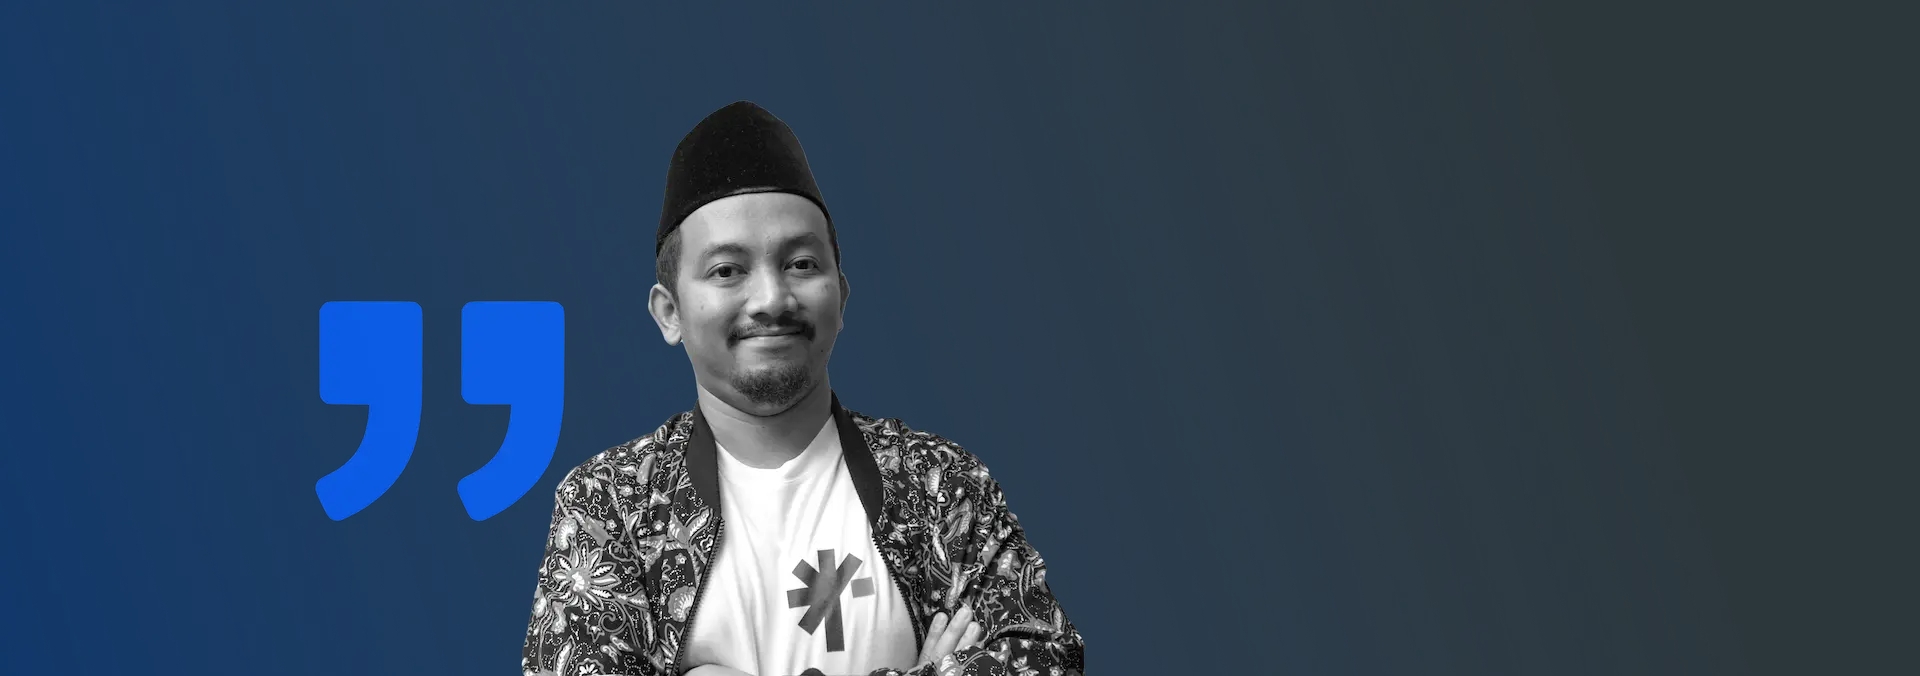 Testimoni kuliah online jurusan Ilmu Data dari Ainun Najib